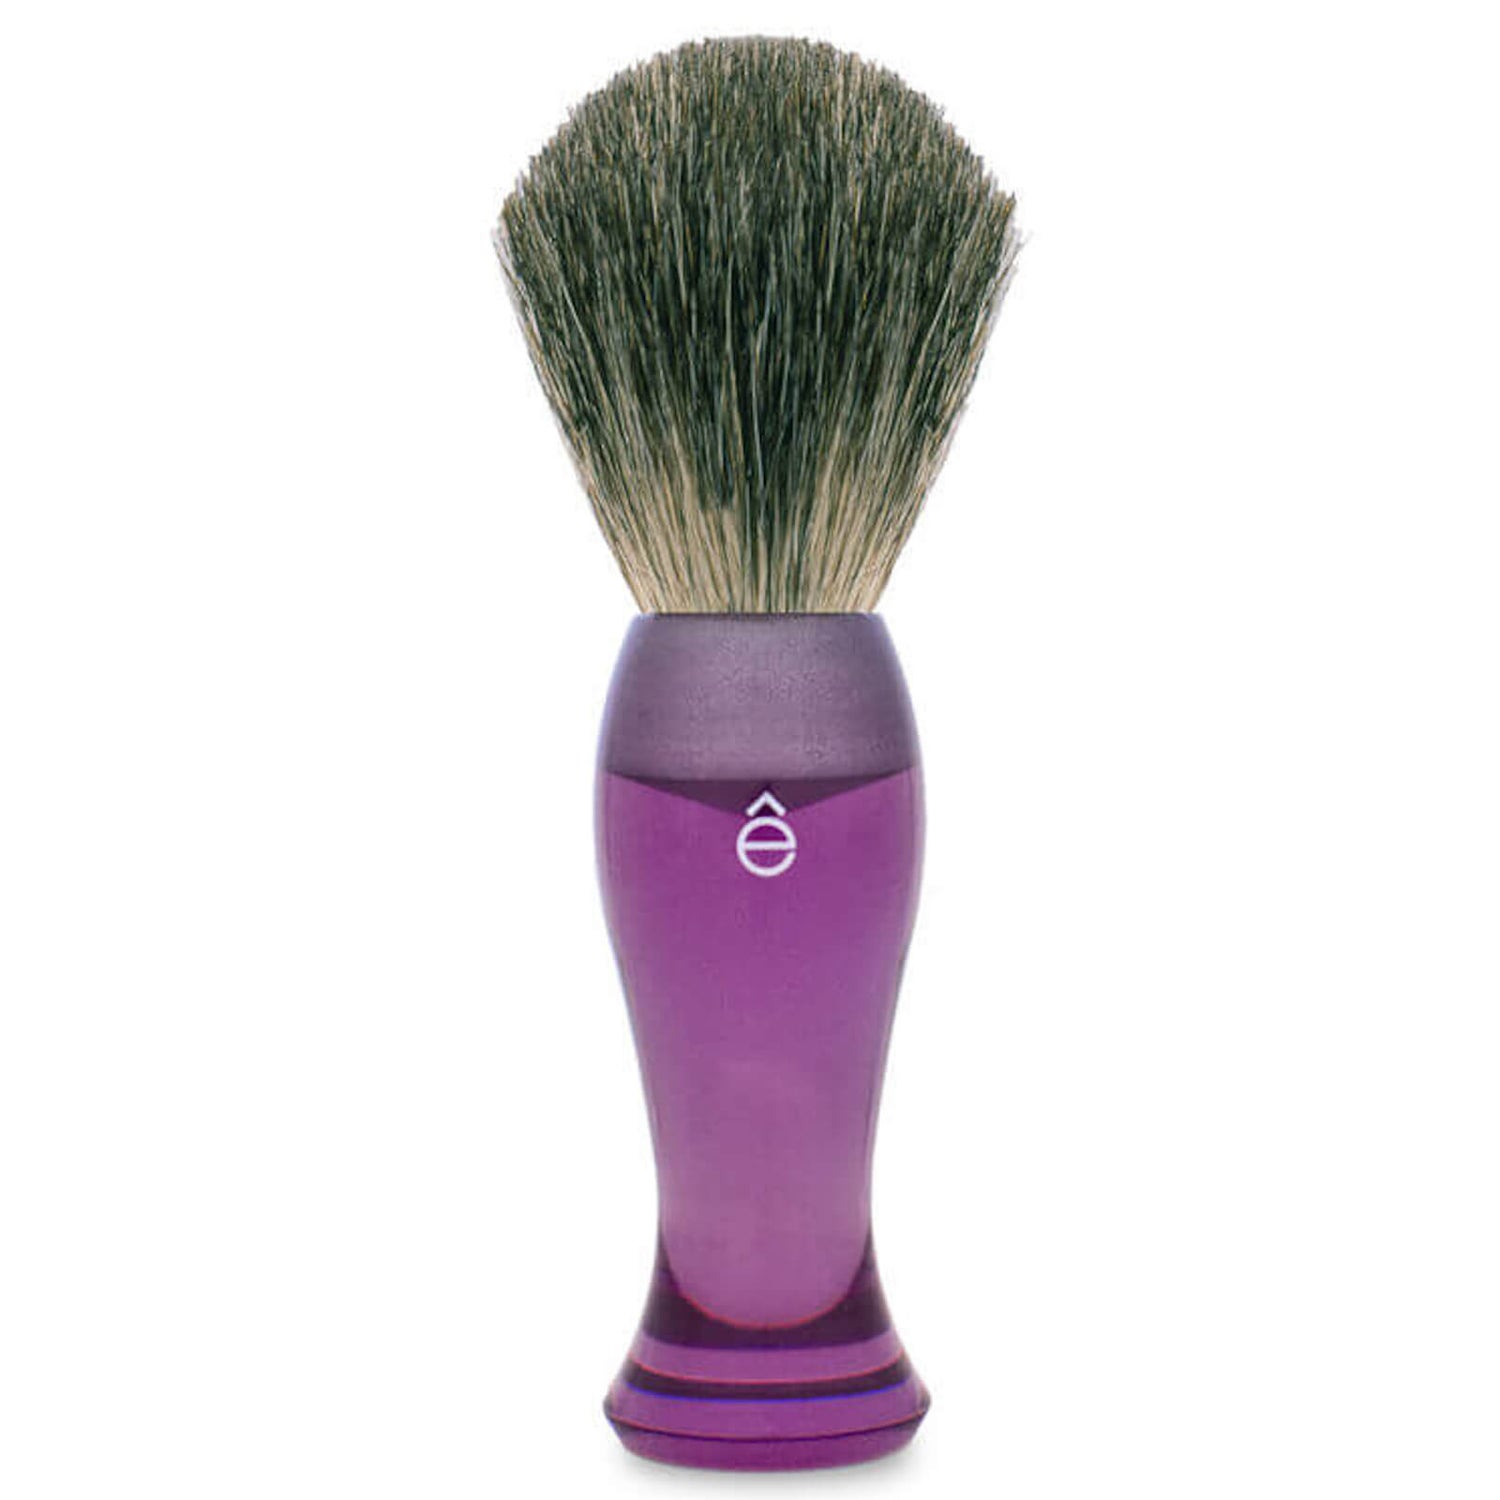 eShave Finest Badger Hair Shaving Brush Long Handle - Purple(이셰이브 파이니스트 배저 헤어 셰이빙 브러시 롱 핸들 - 퍼플)